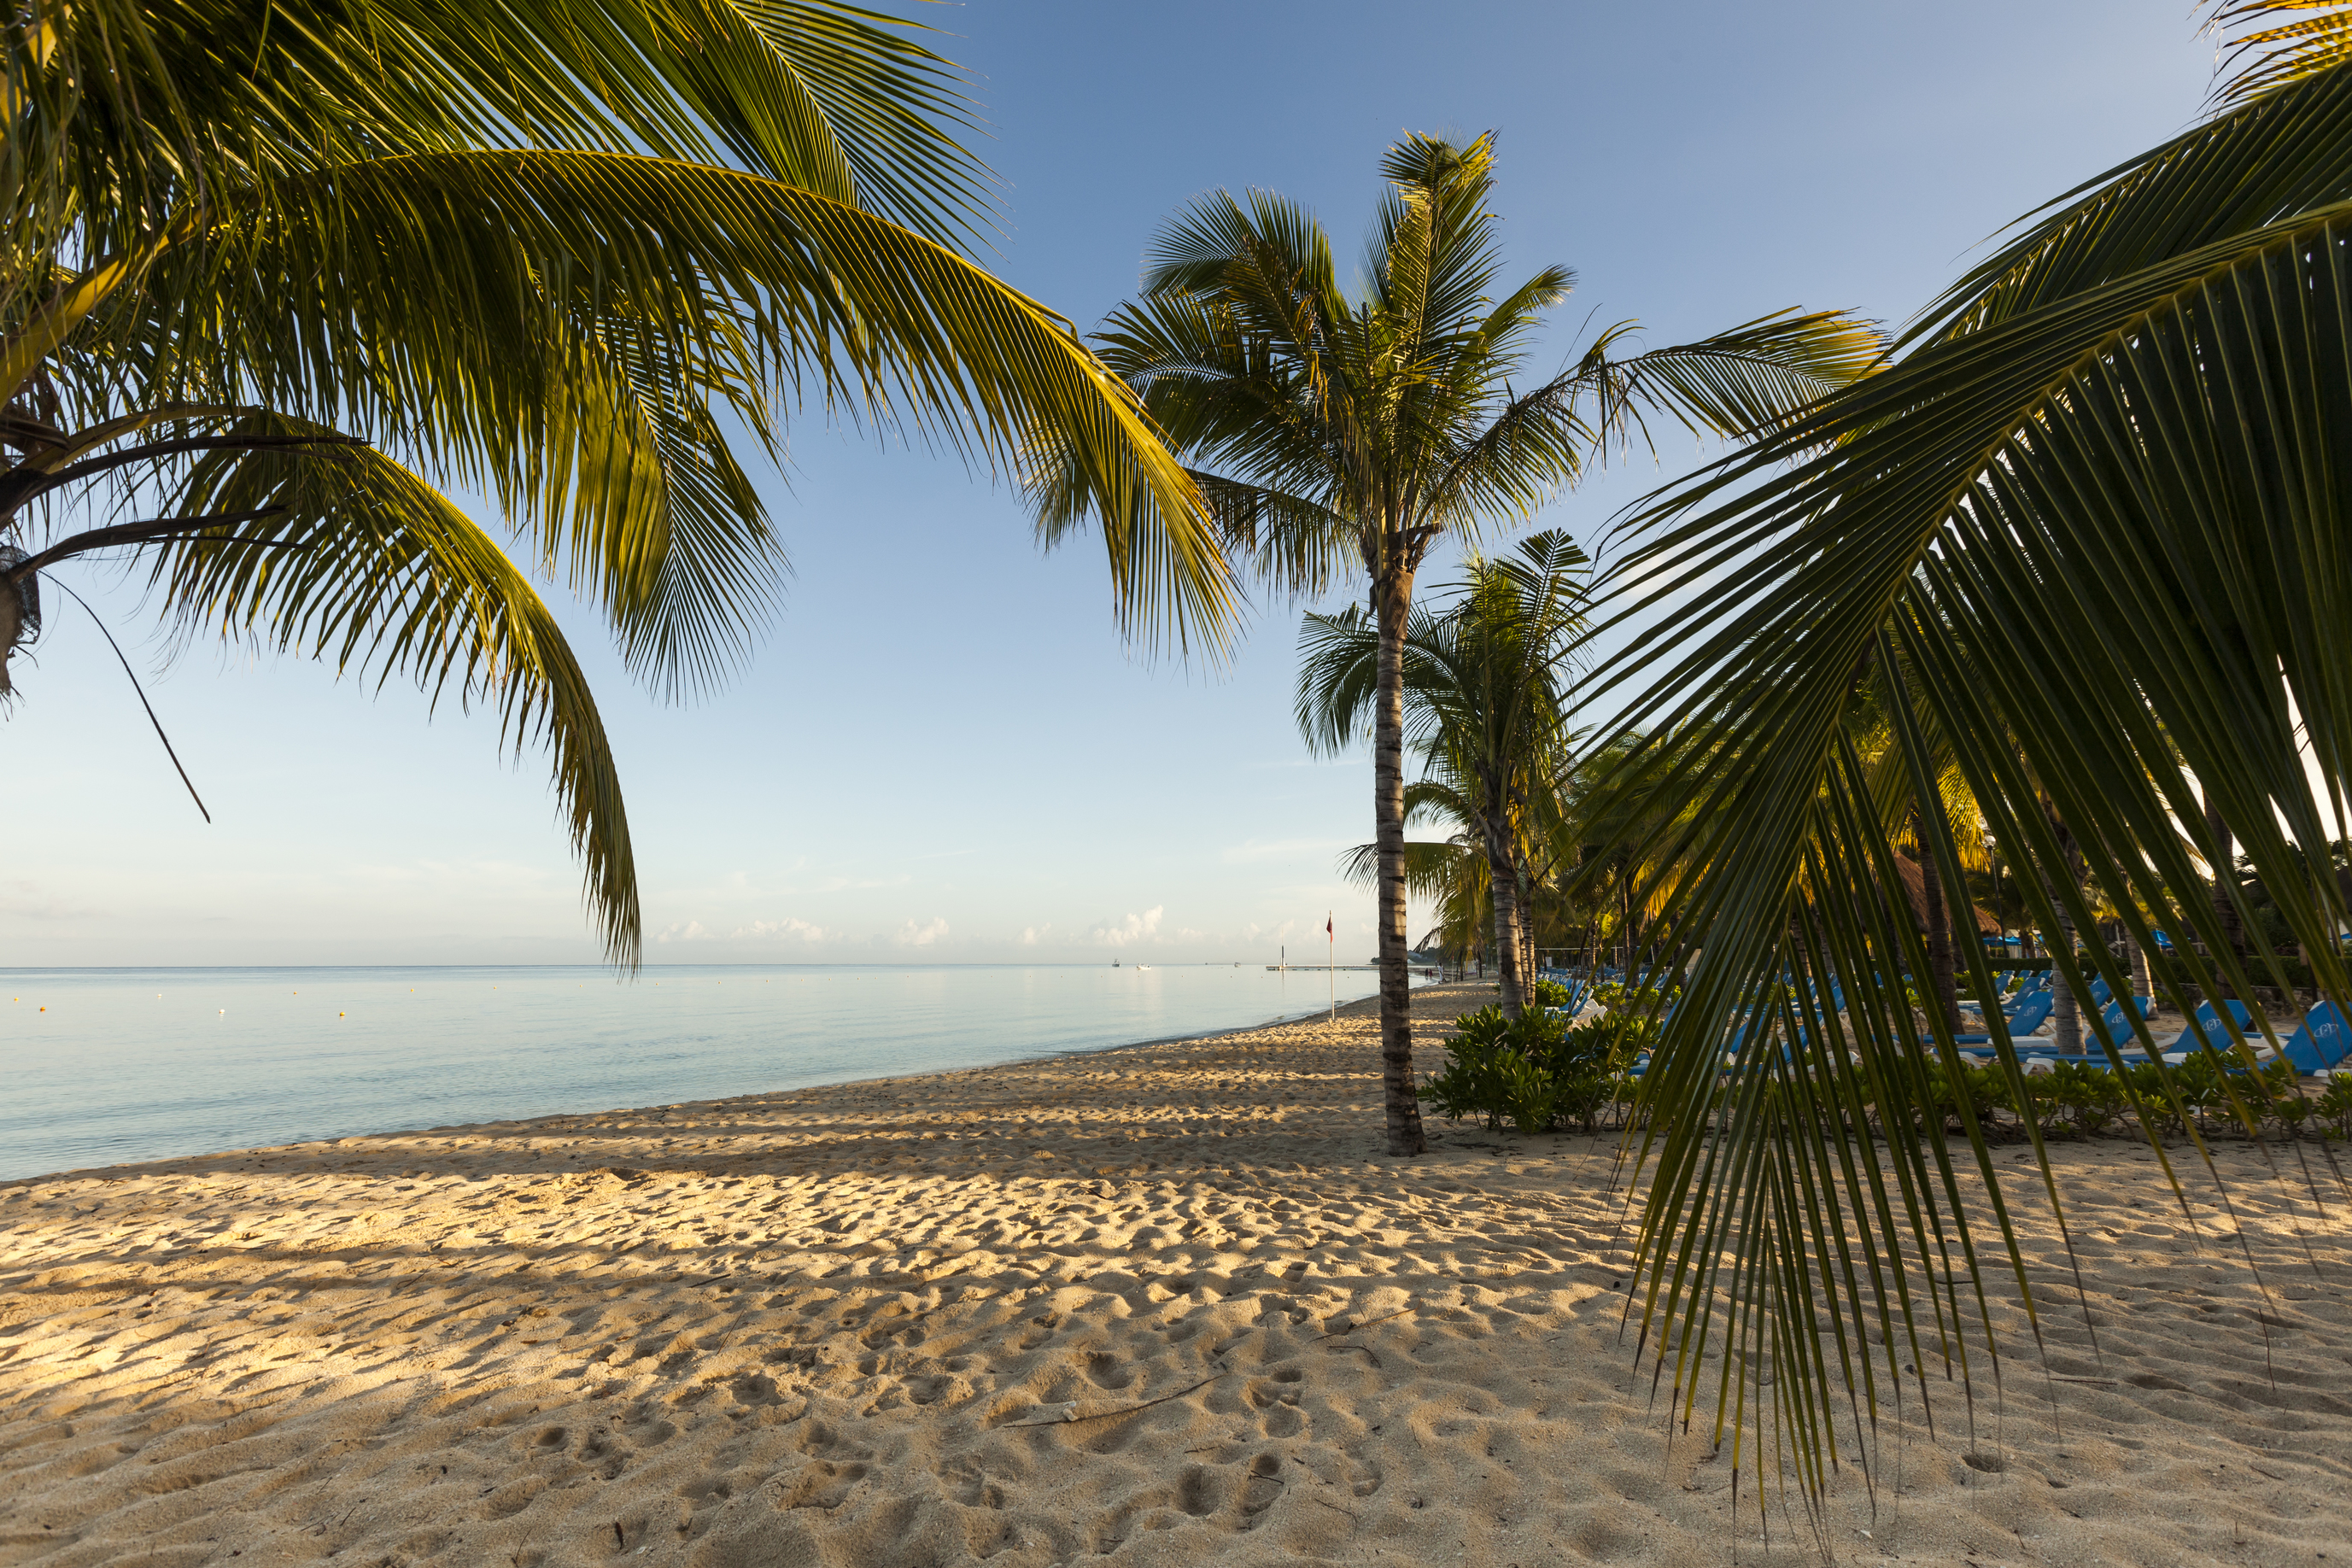 Allegro Cozumel - Cozumel, Riviera Maya - On The Beach